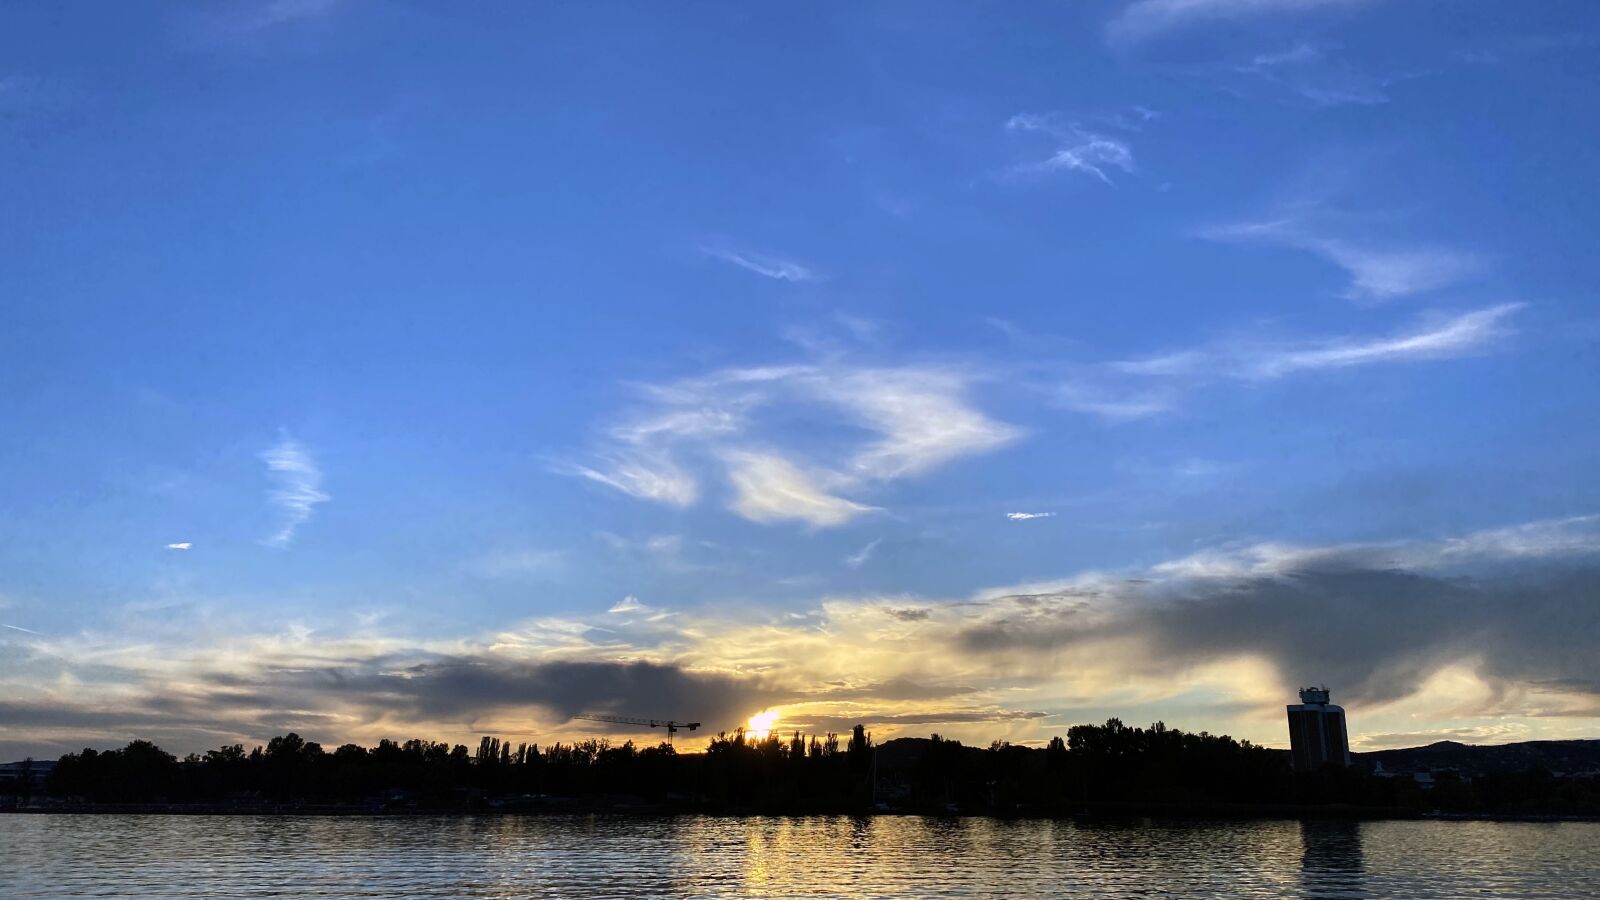 iPhone 11 Pro back triple camera 4.25mm f/1.8 sample photo. Sunset, lake, landscape photography